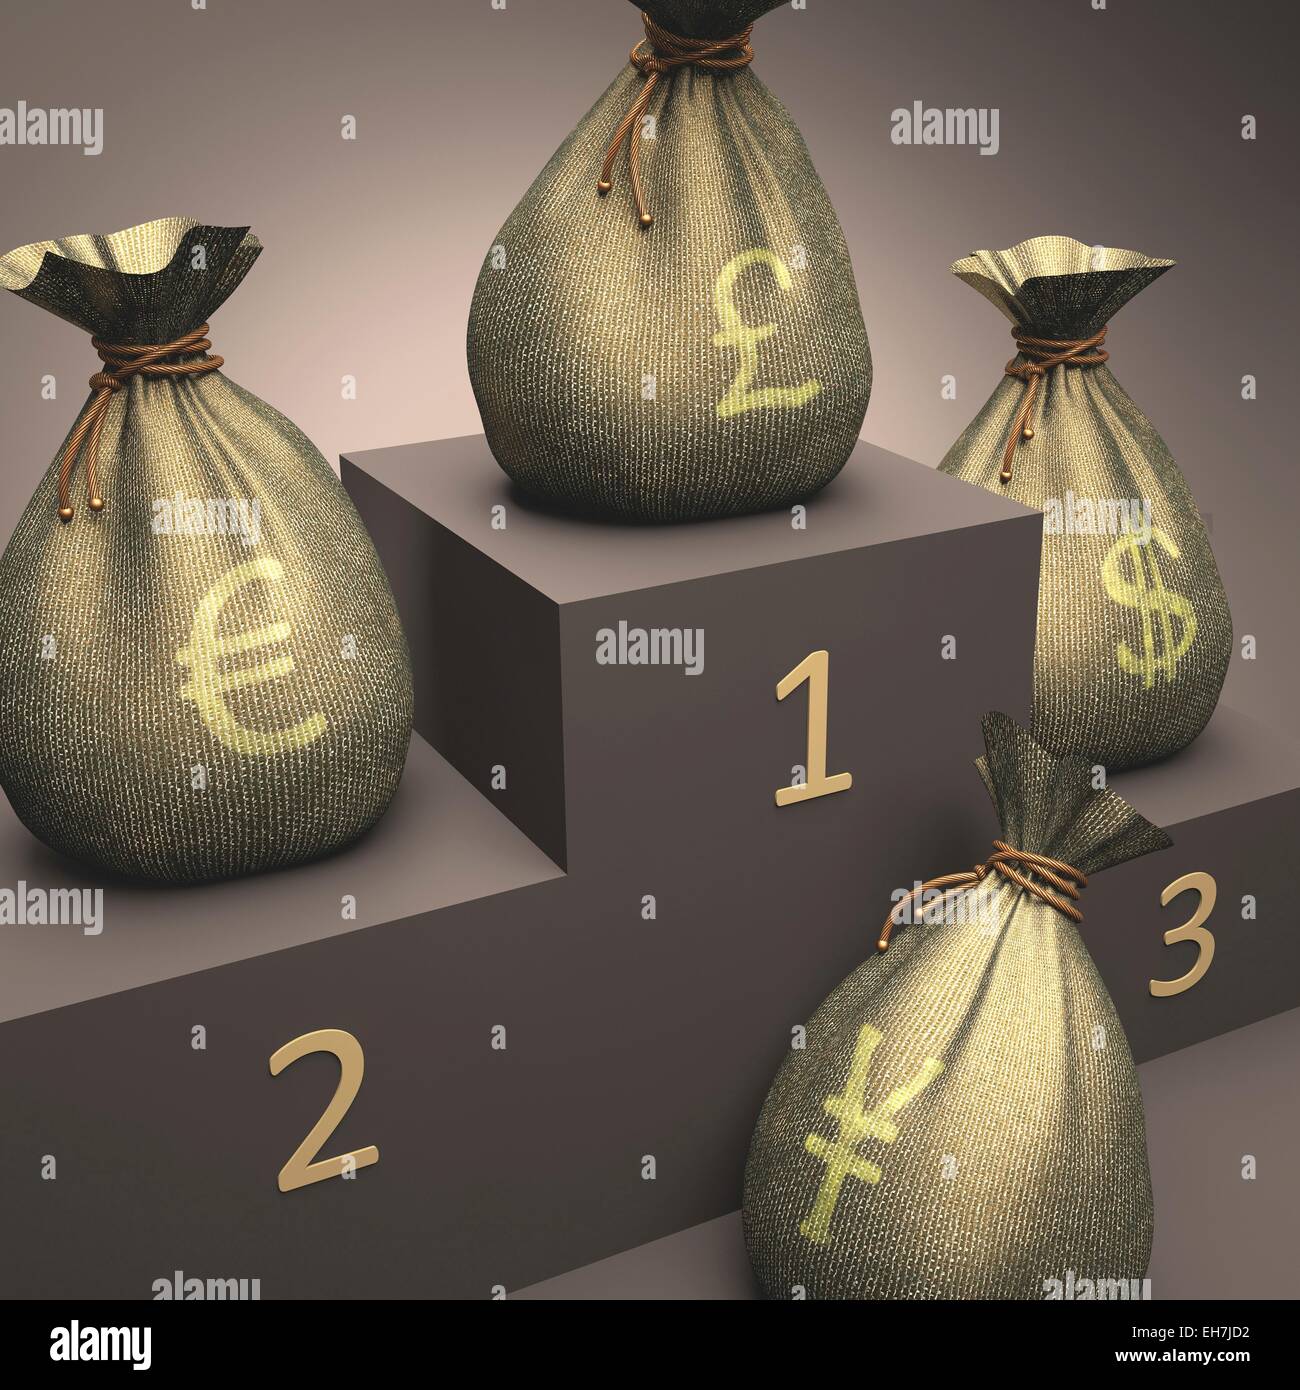 Currencies on a podium, illustration Stock Photo